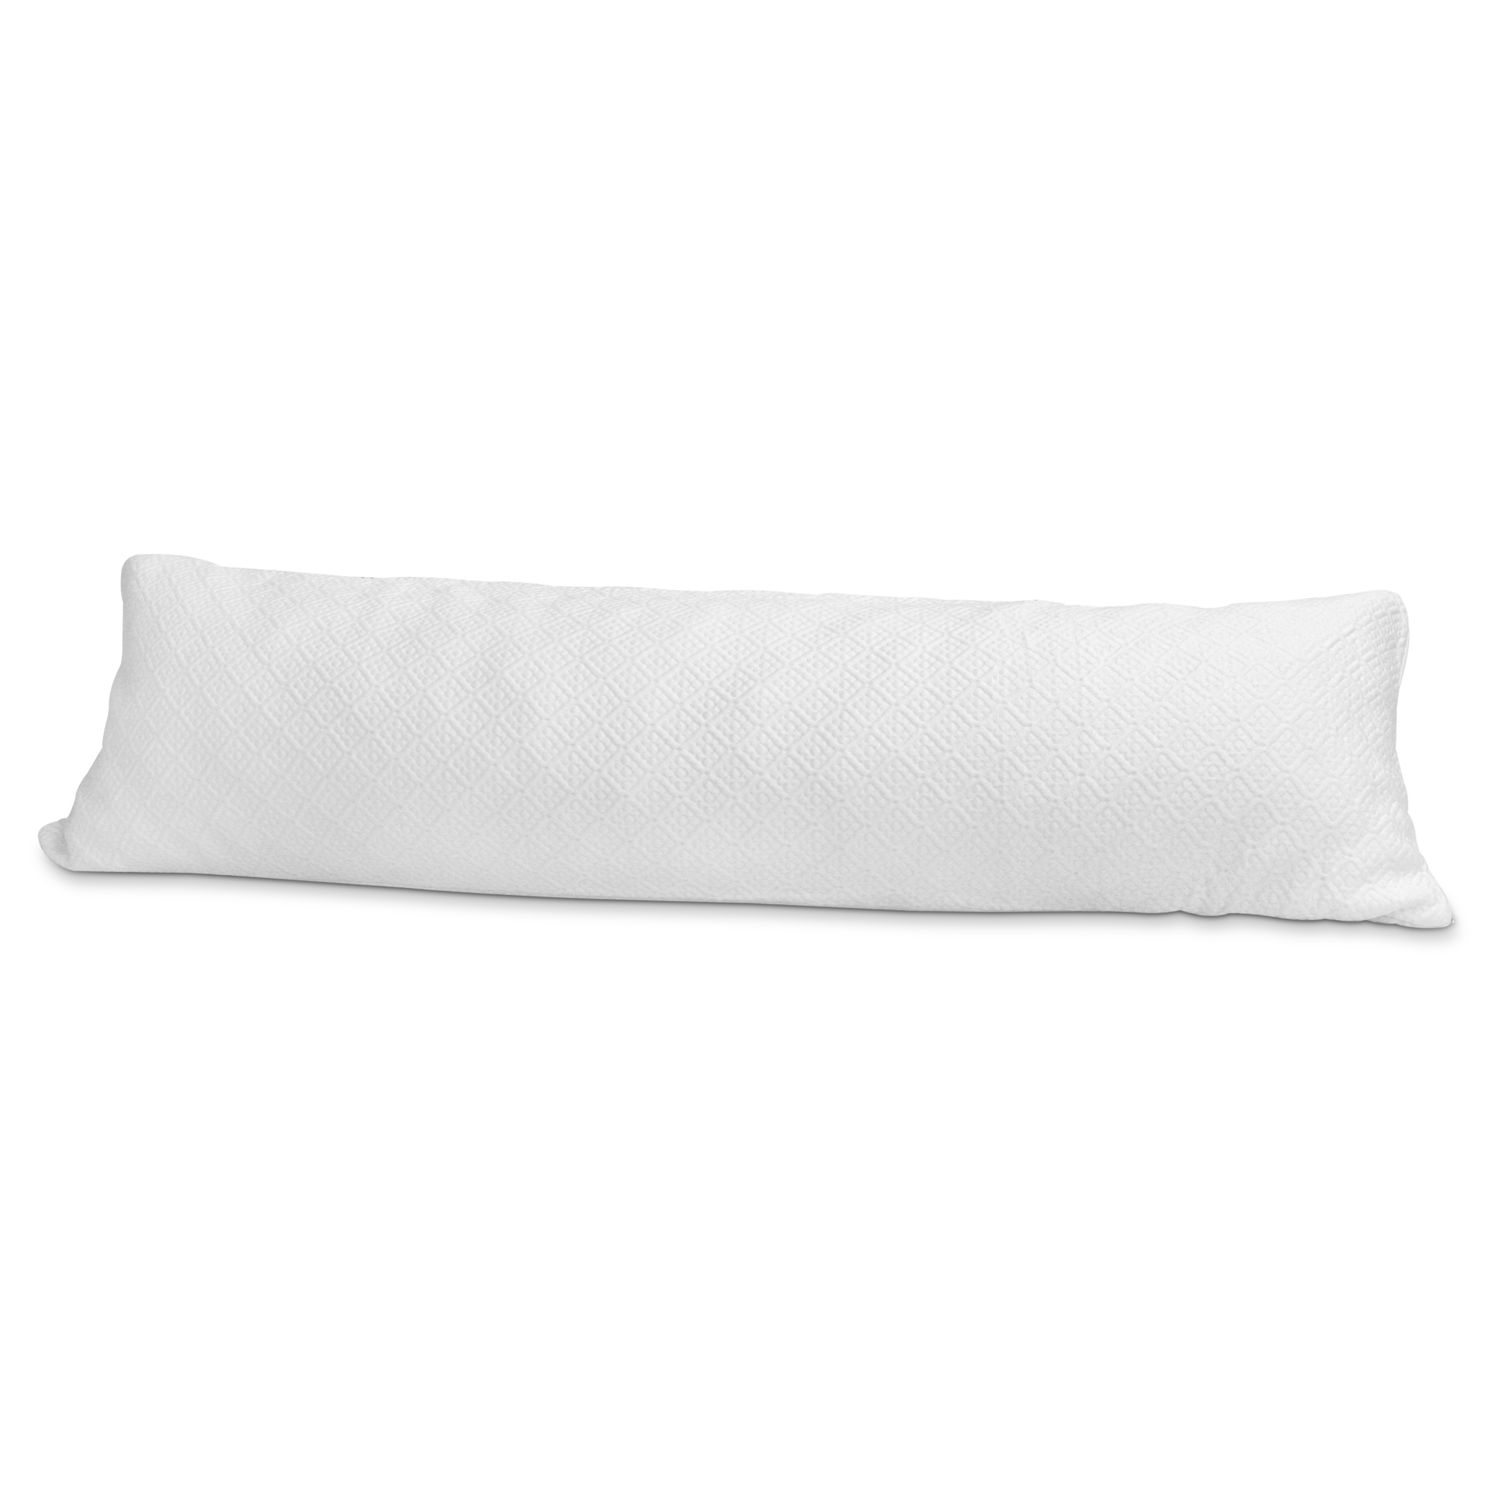 Leg elevation pillow – Dreamzie